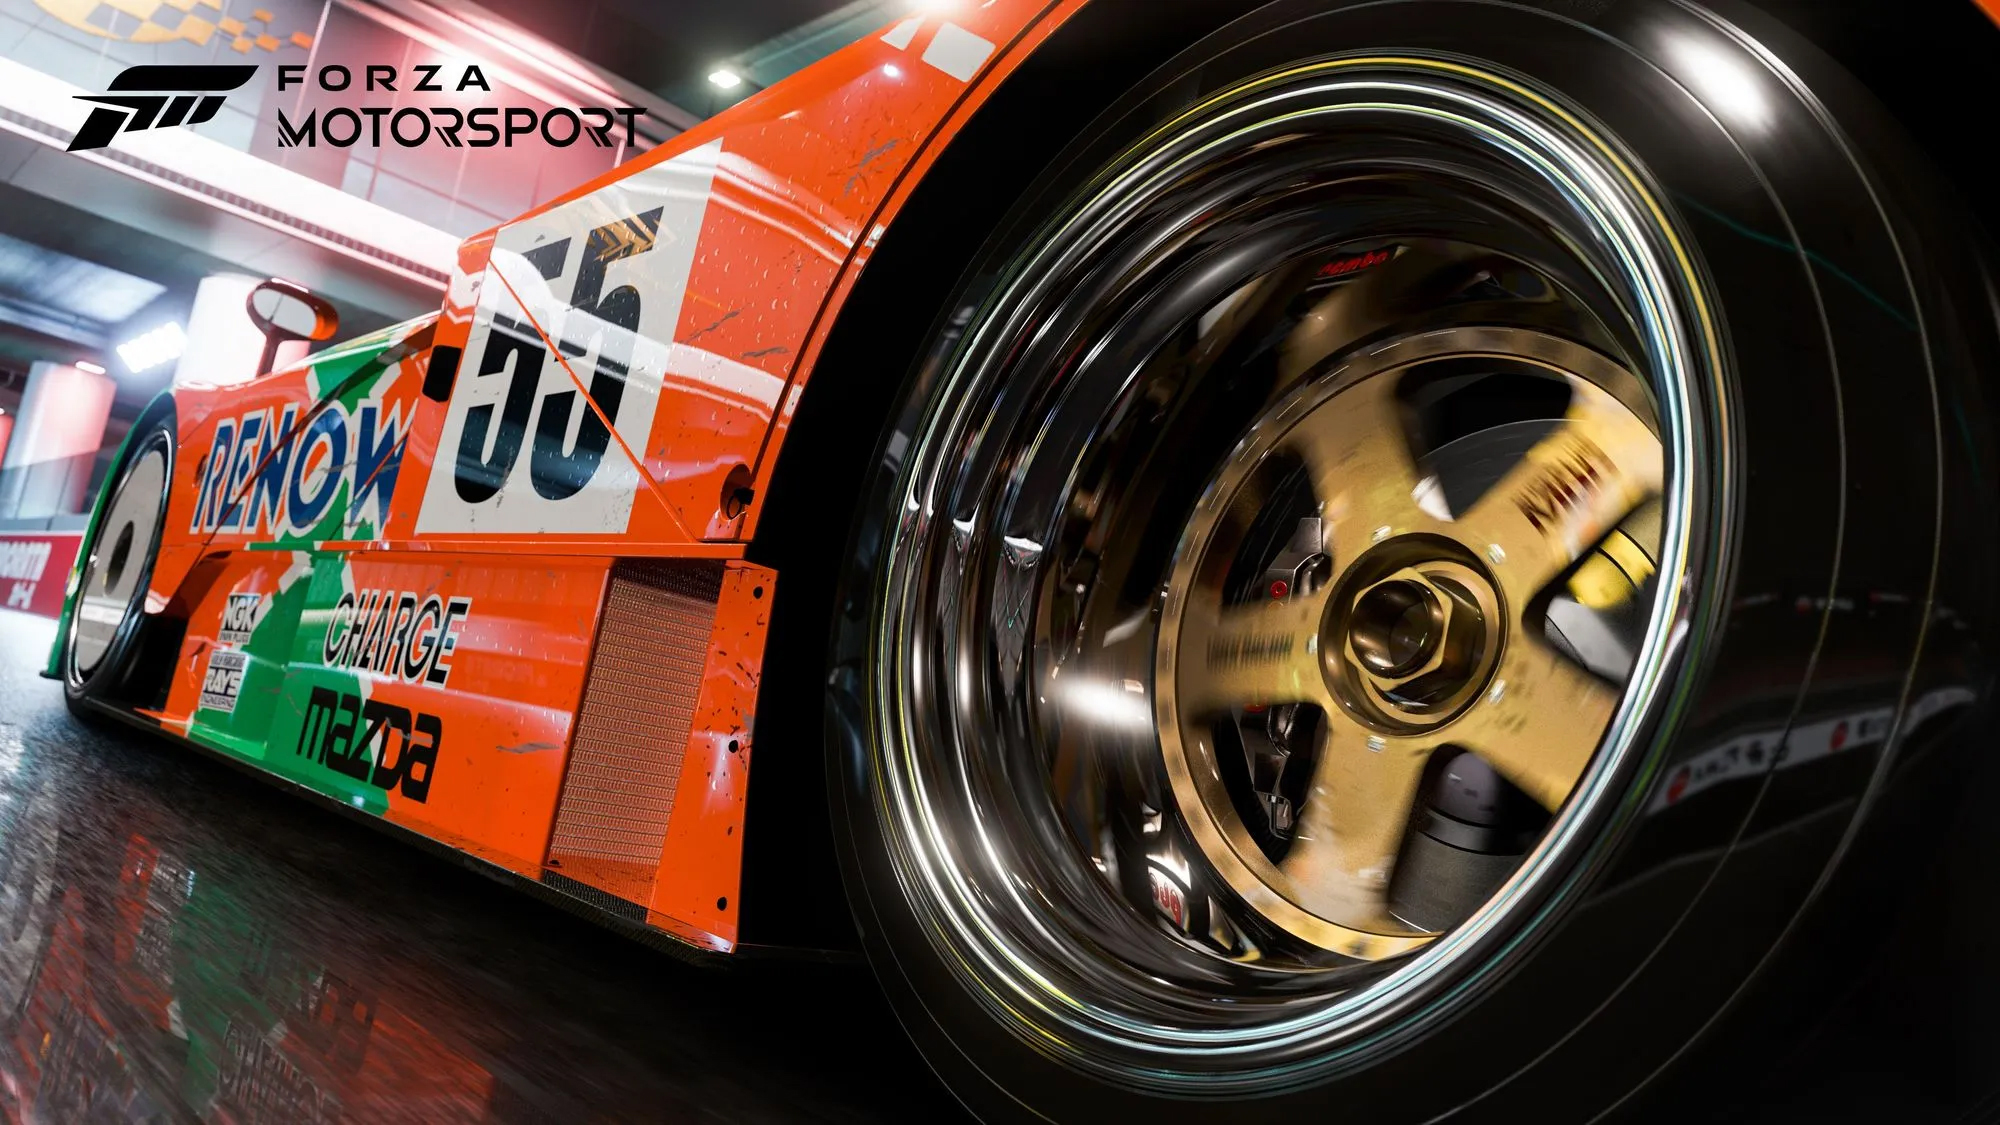 Campeonato WEC-Hypercars 2023 (Forza motorsport 8) : r/forzamotorsport